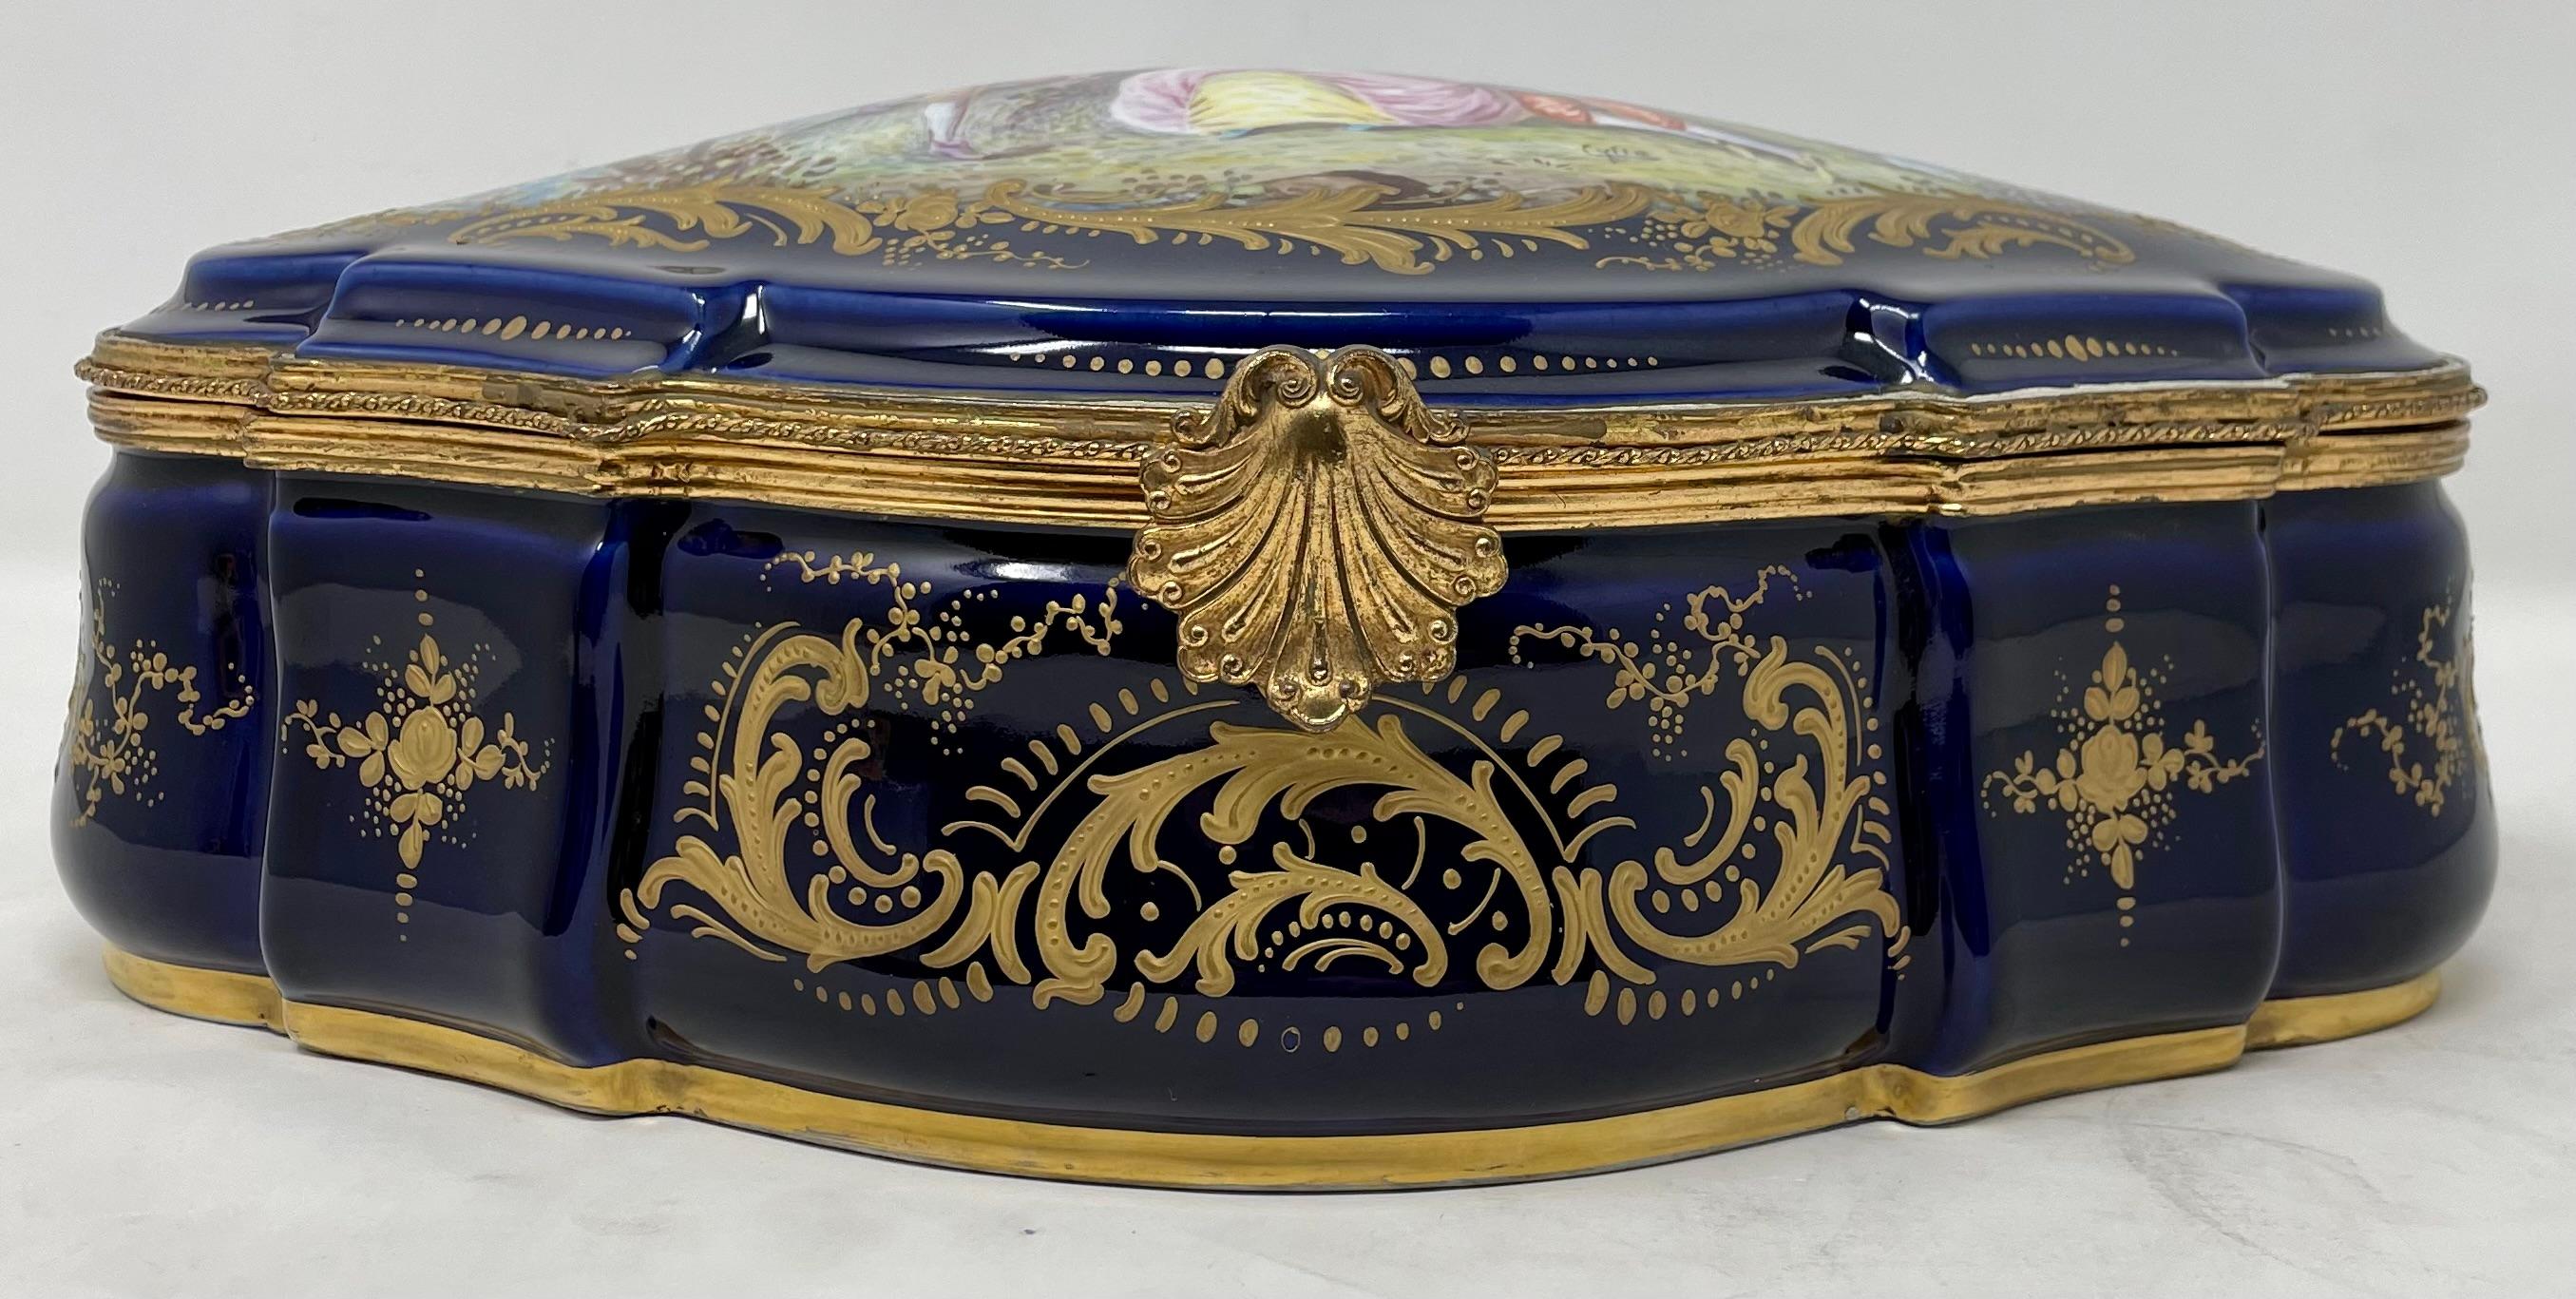 Antique French Sevres porcelain cobalt blue and gold box, circa 1900.